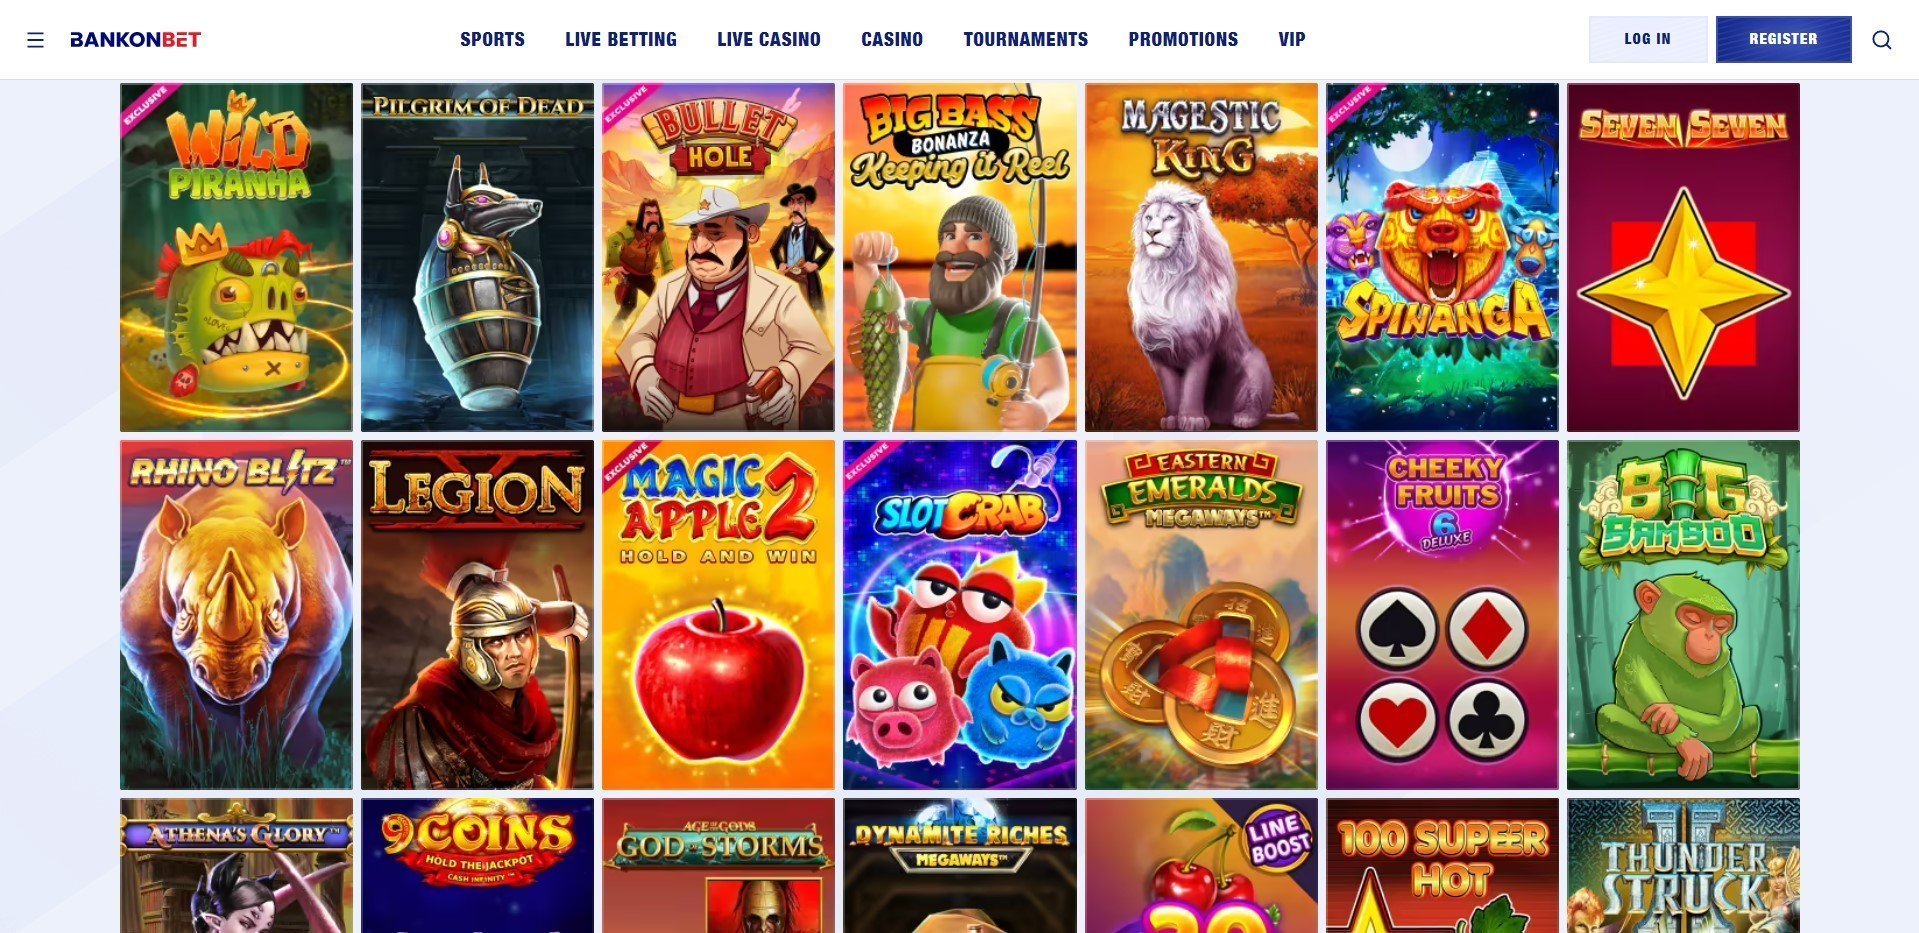 Bankonbet Casino Games